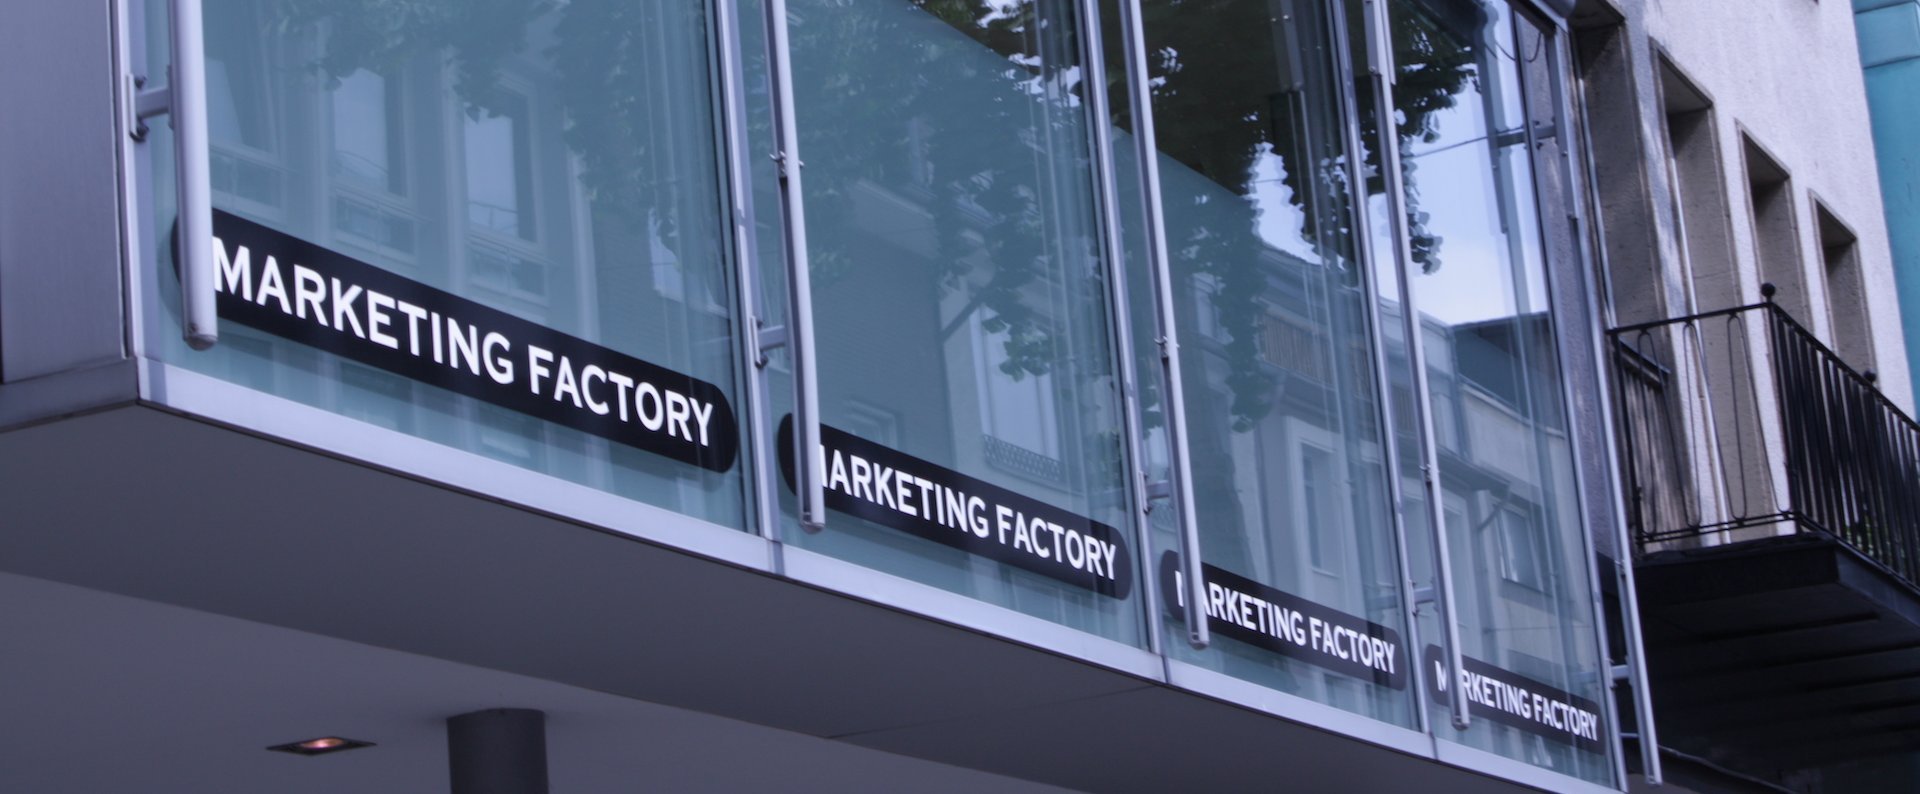 Building facade Marketing Factory